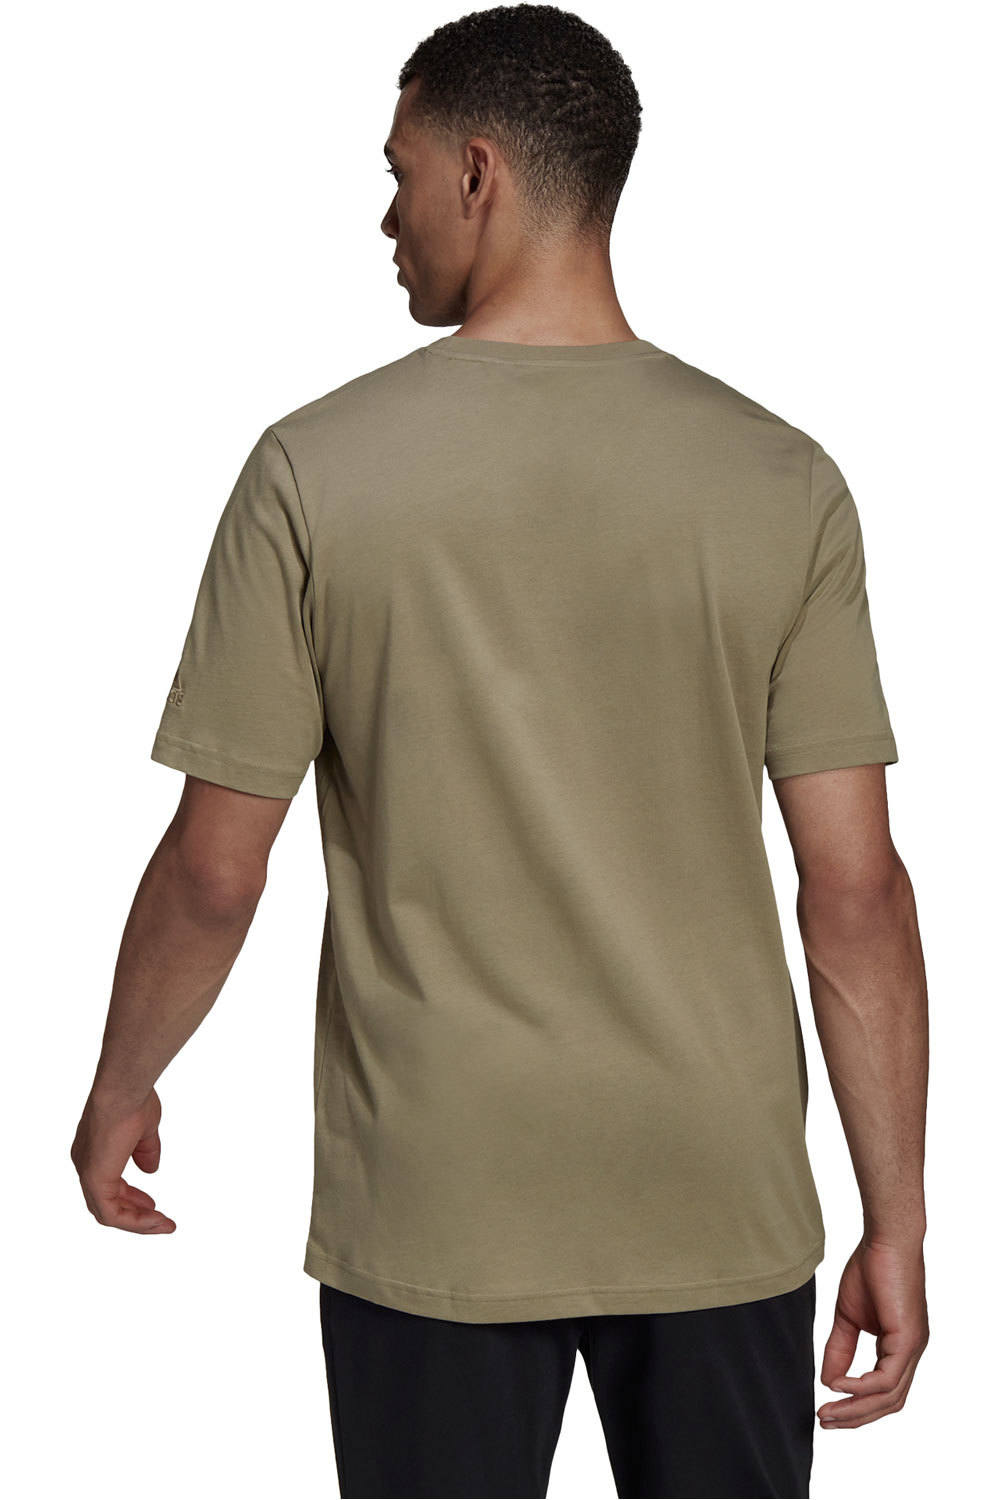 adidas camiseta manga corta hombre Essentials Embroidered Linear Logo vista trasera